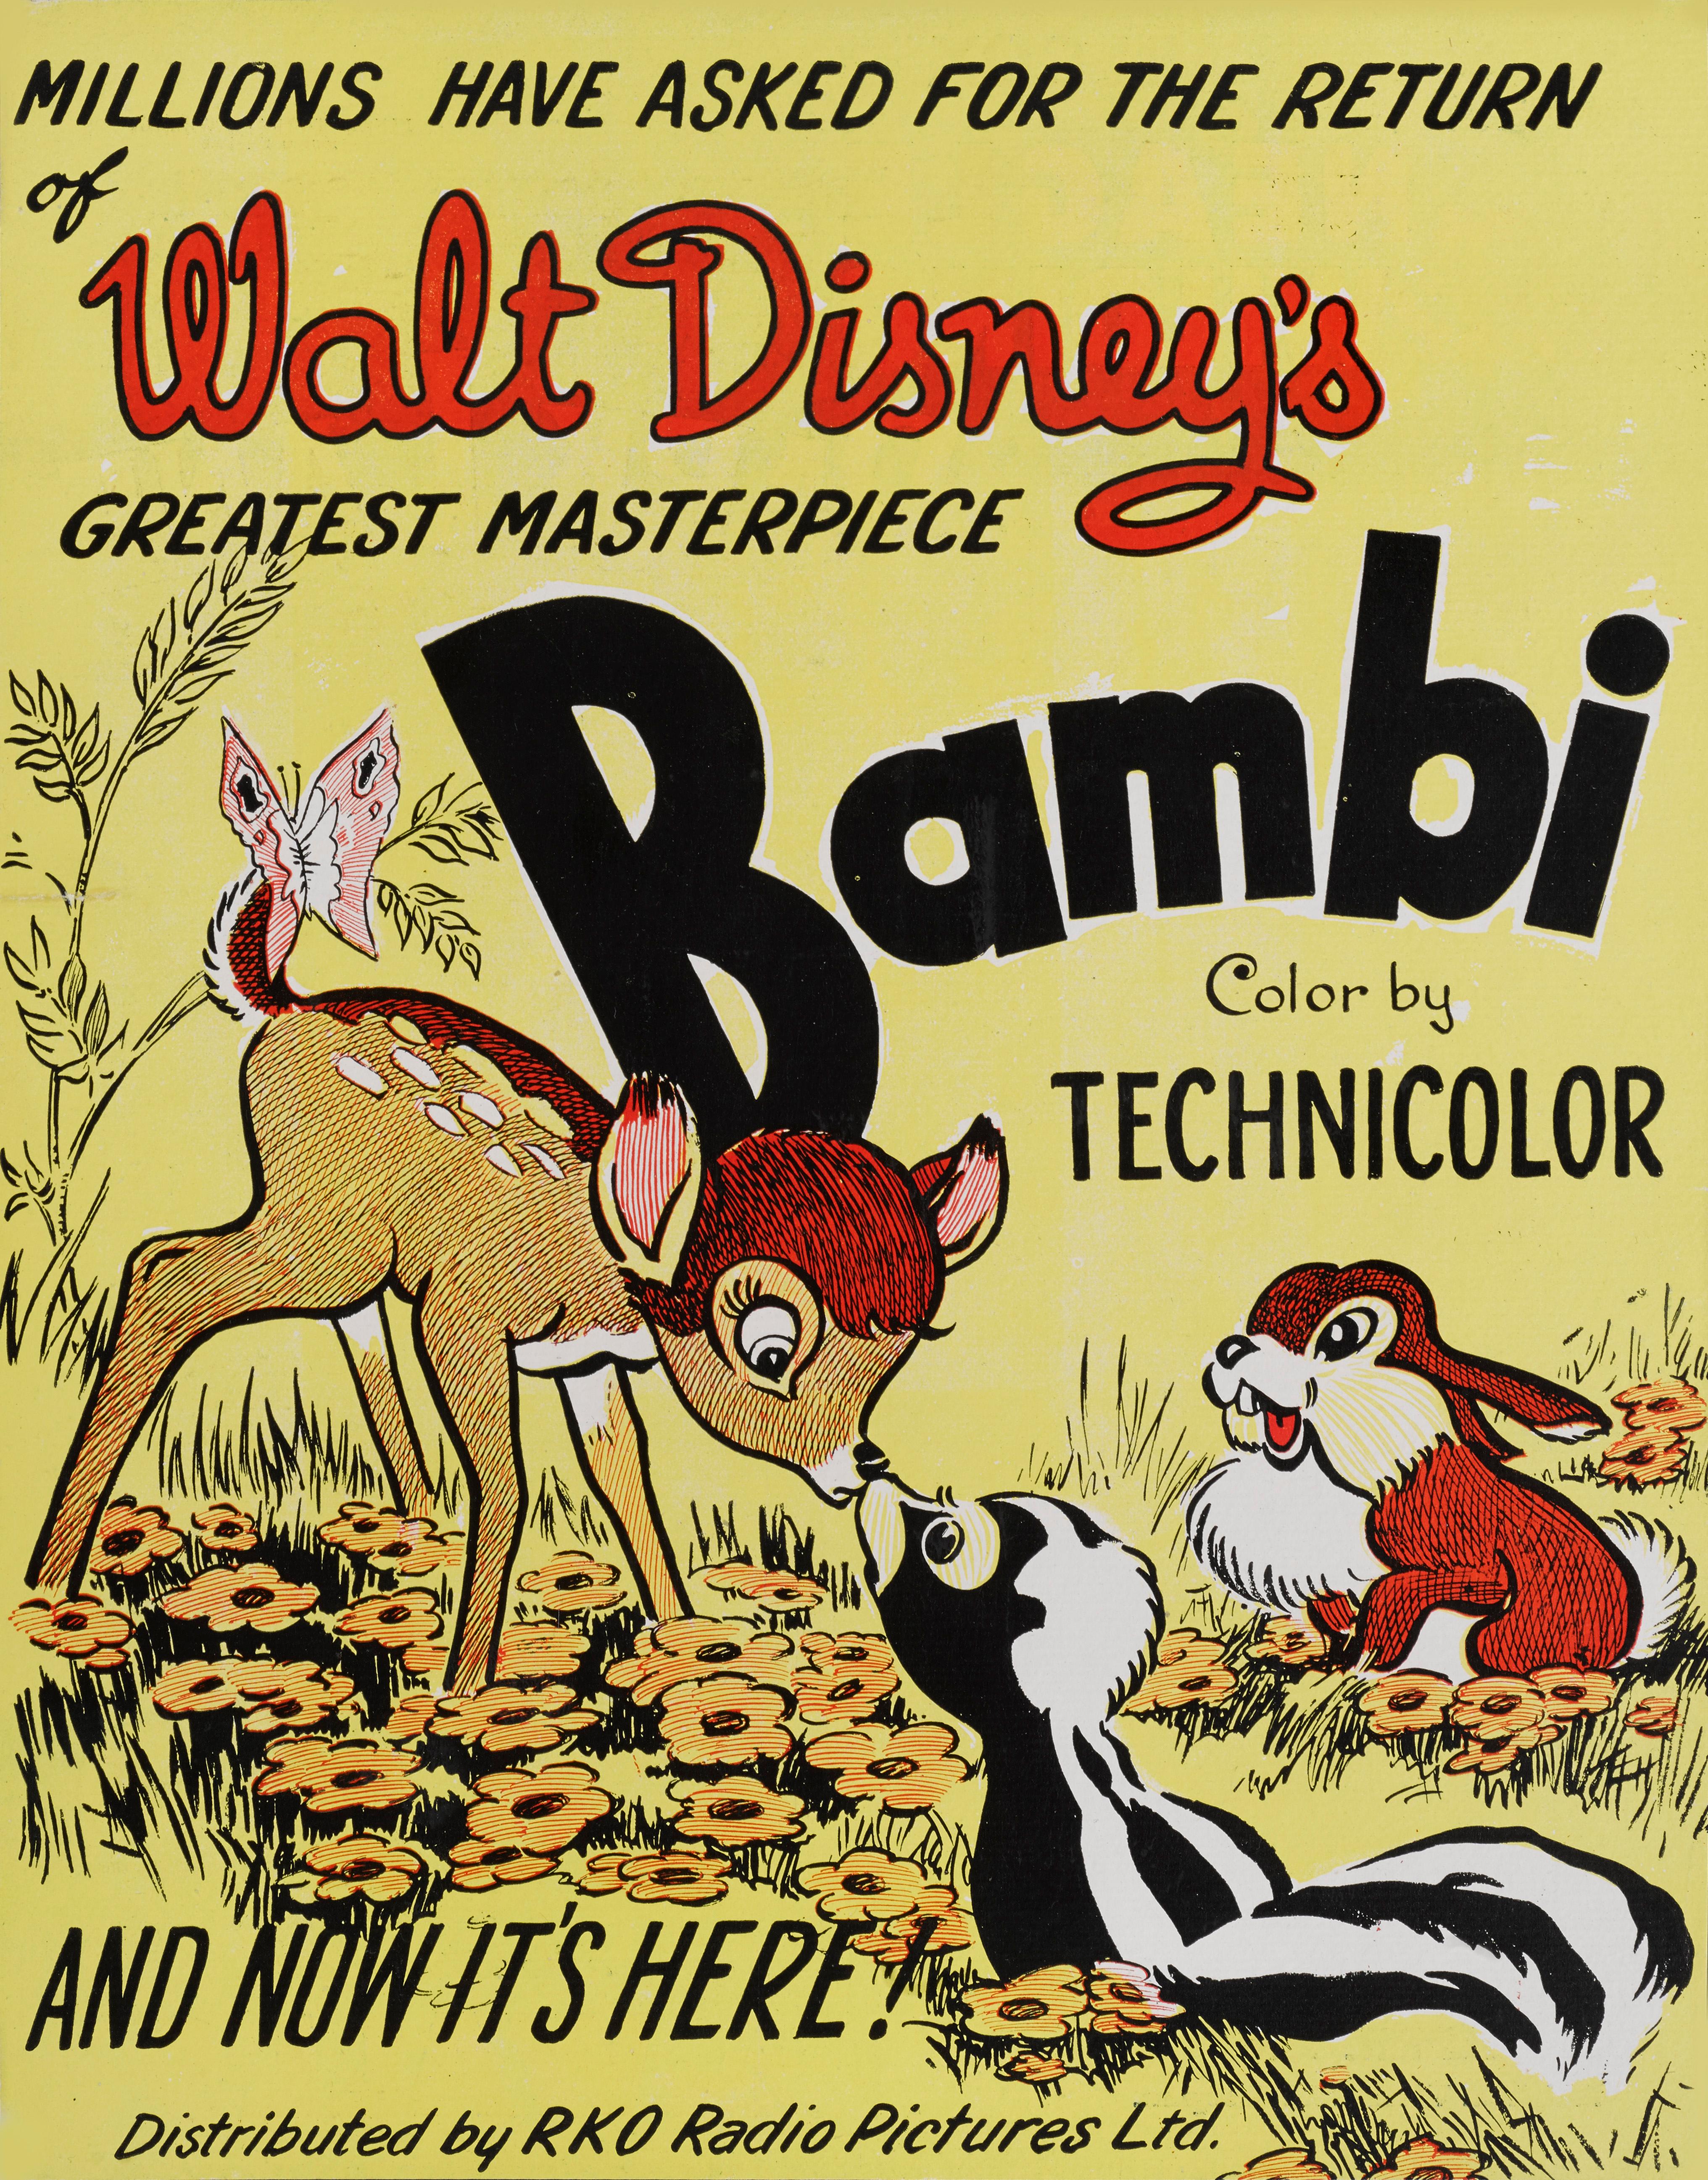 bambi movie poster 1942